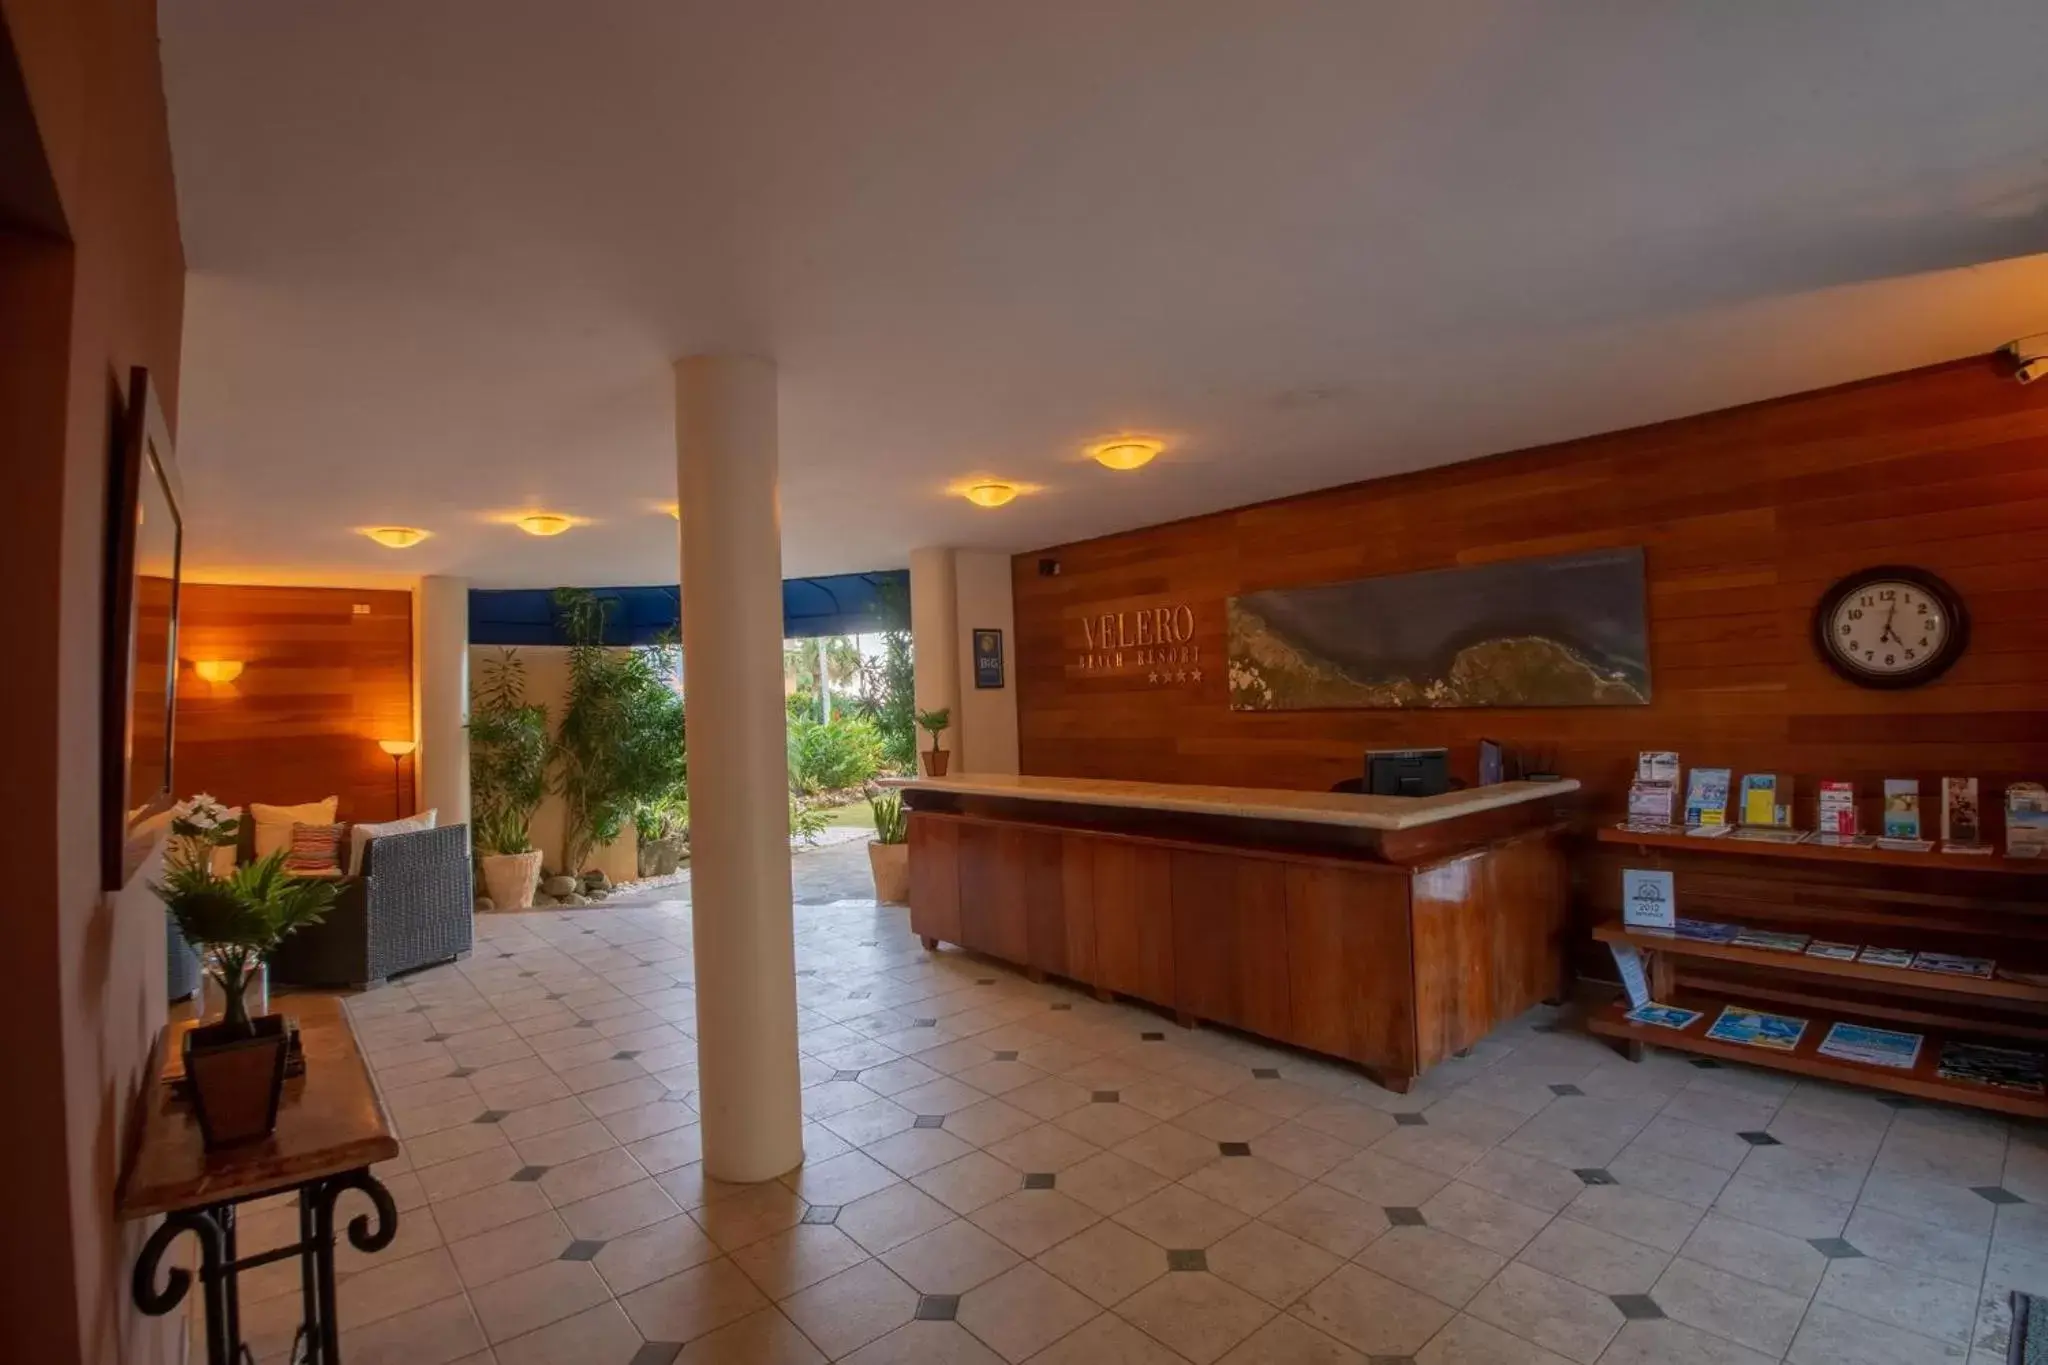 Lobby/Reception in Velero Beach Resort